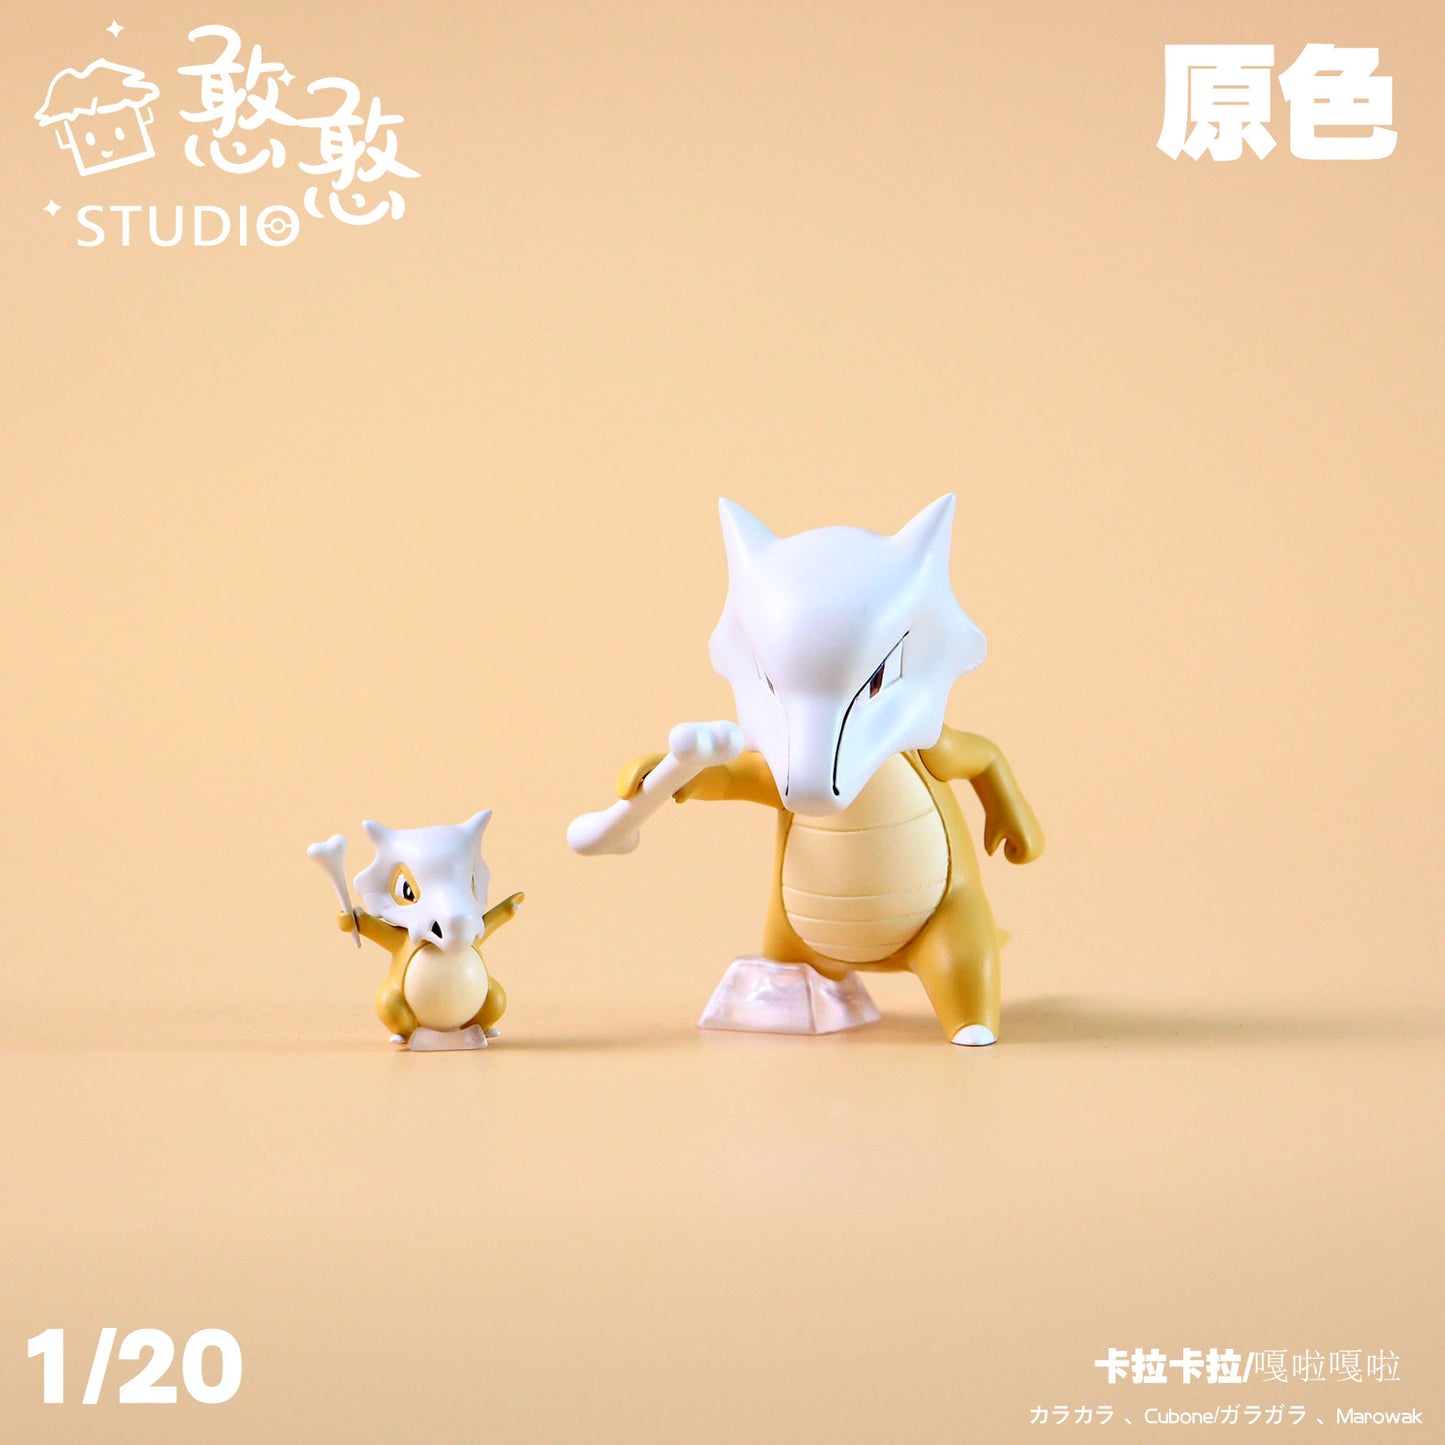 〖Make Up The Balance〗Pokemon Scale World Cubone Marowak #104 #105 1:20 - HH Studio